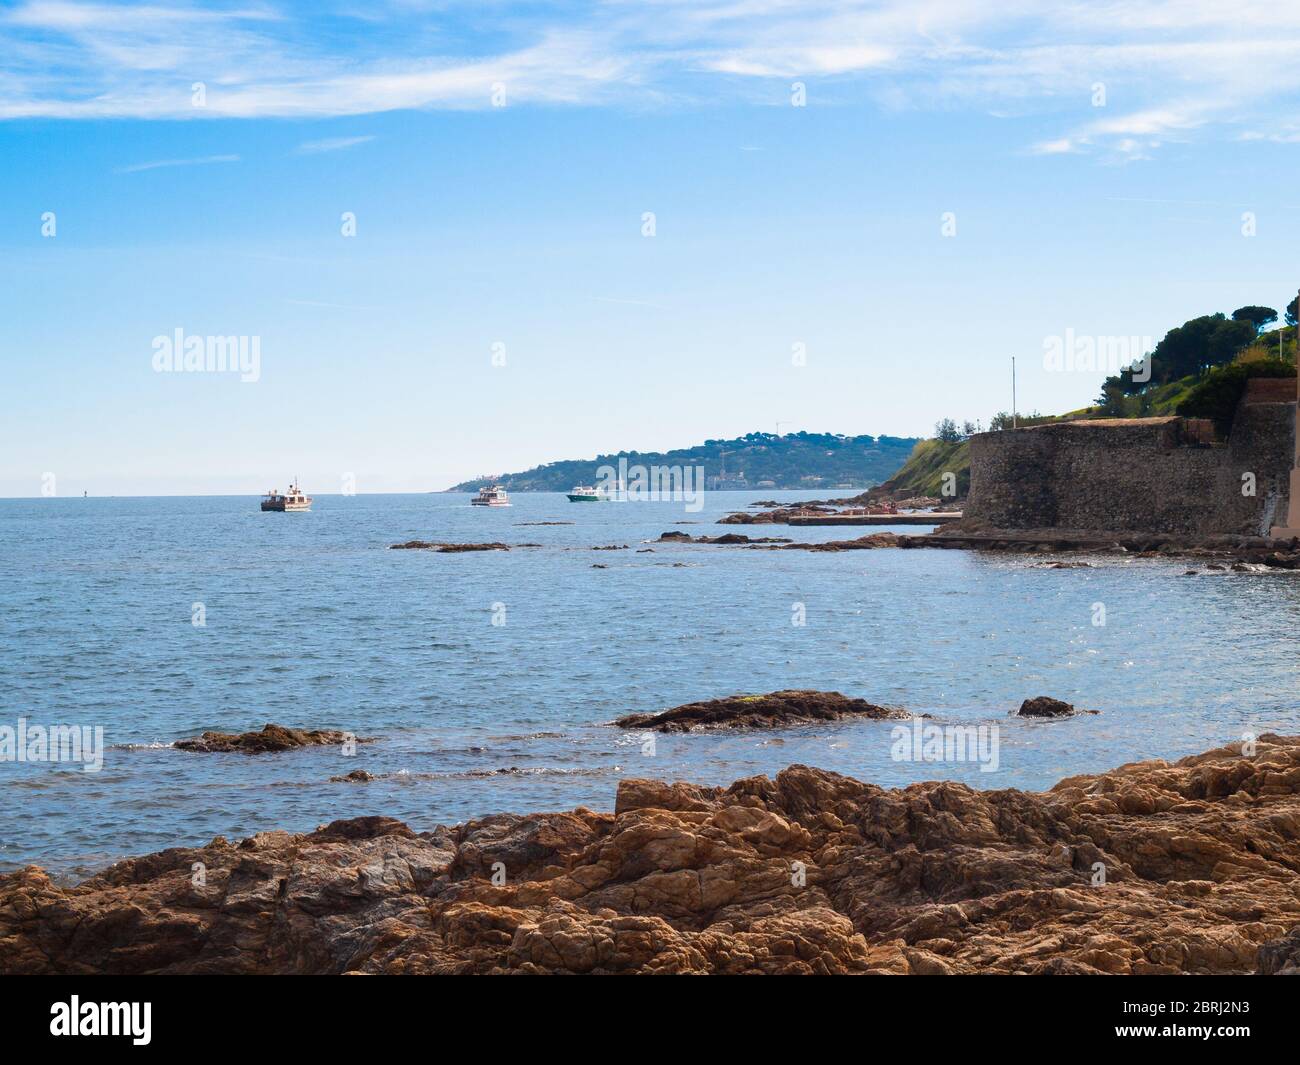 Coastline in Saint-Tropez, French Riviera, Côte d'Azur, France Stock Photo